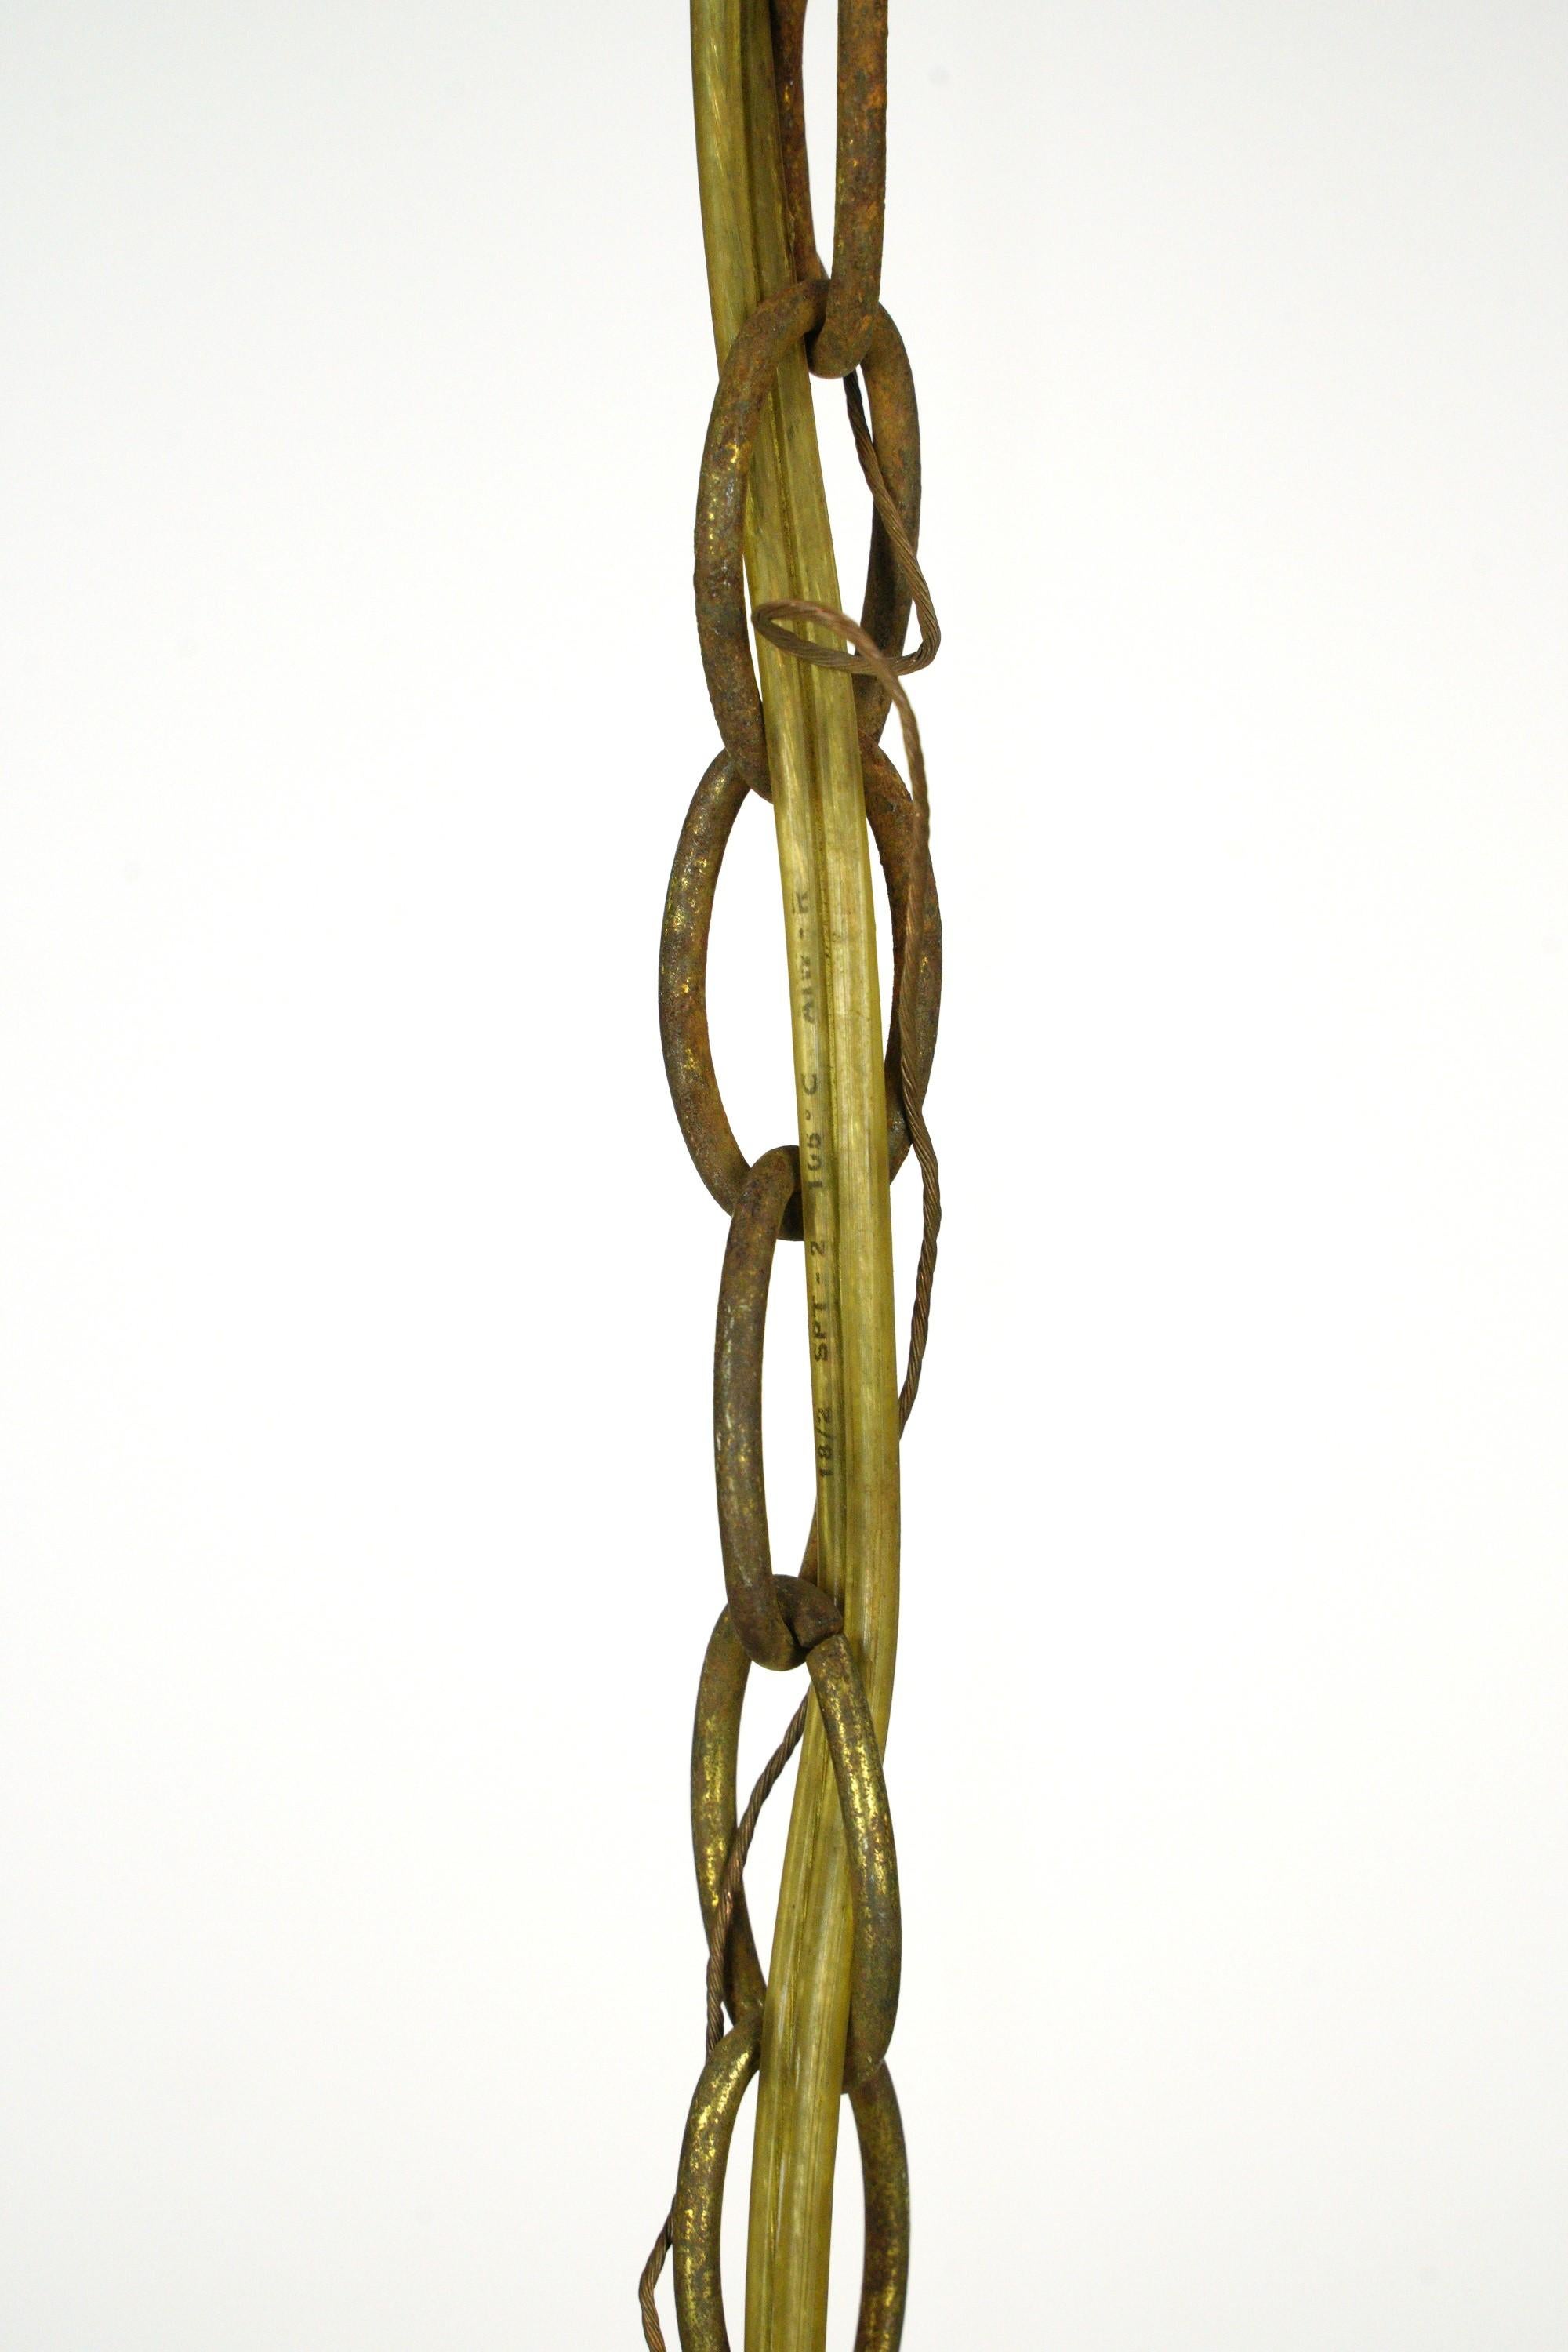 Ruffled Green Glass Shade Brass Chain Pendant Light For Sale 5